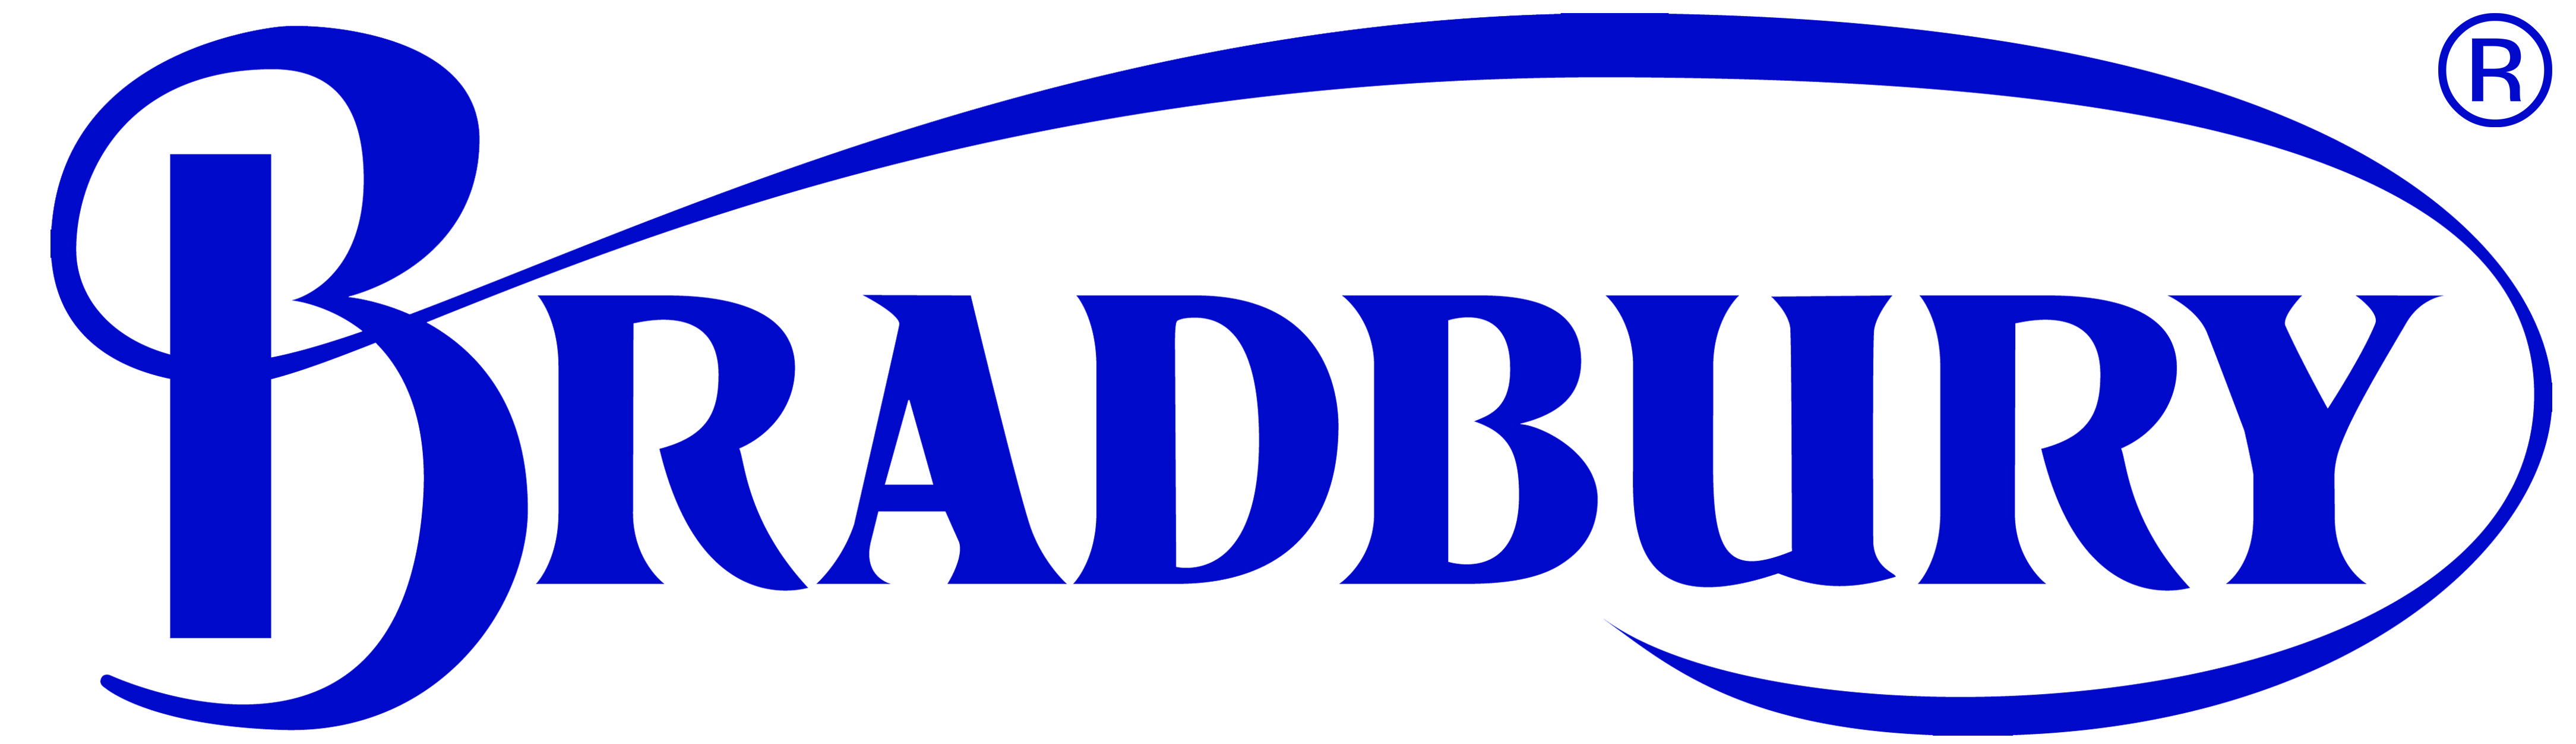 Bradbury Logo - Bradbury Epco Logo in the Garage Equipment Industry!